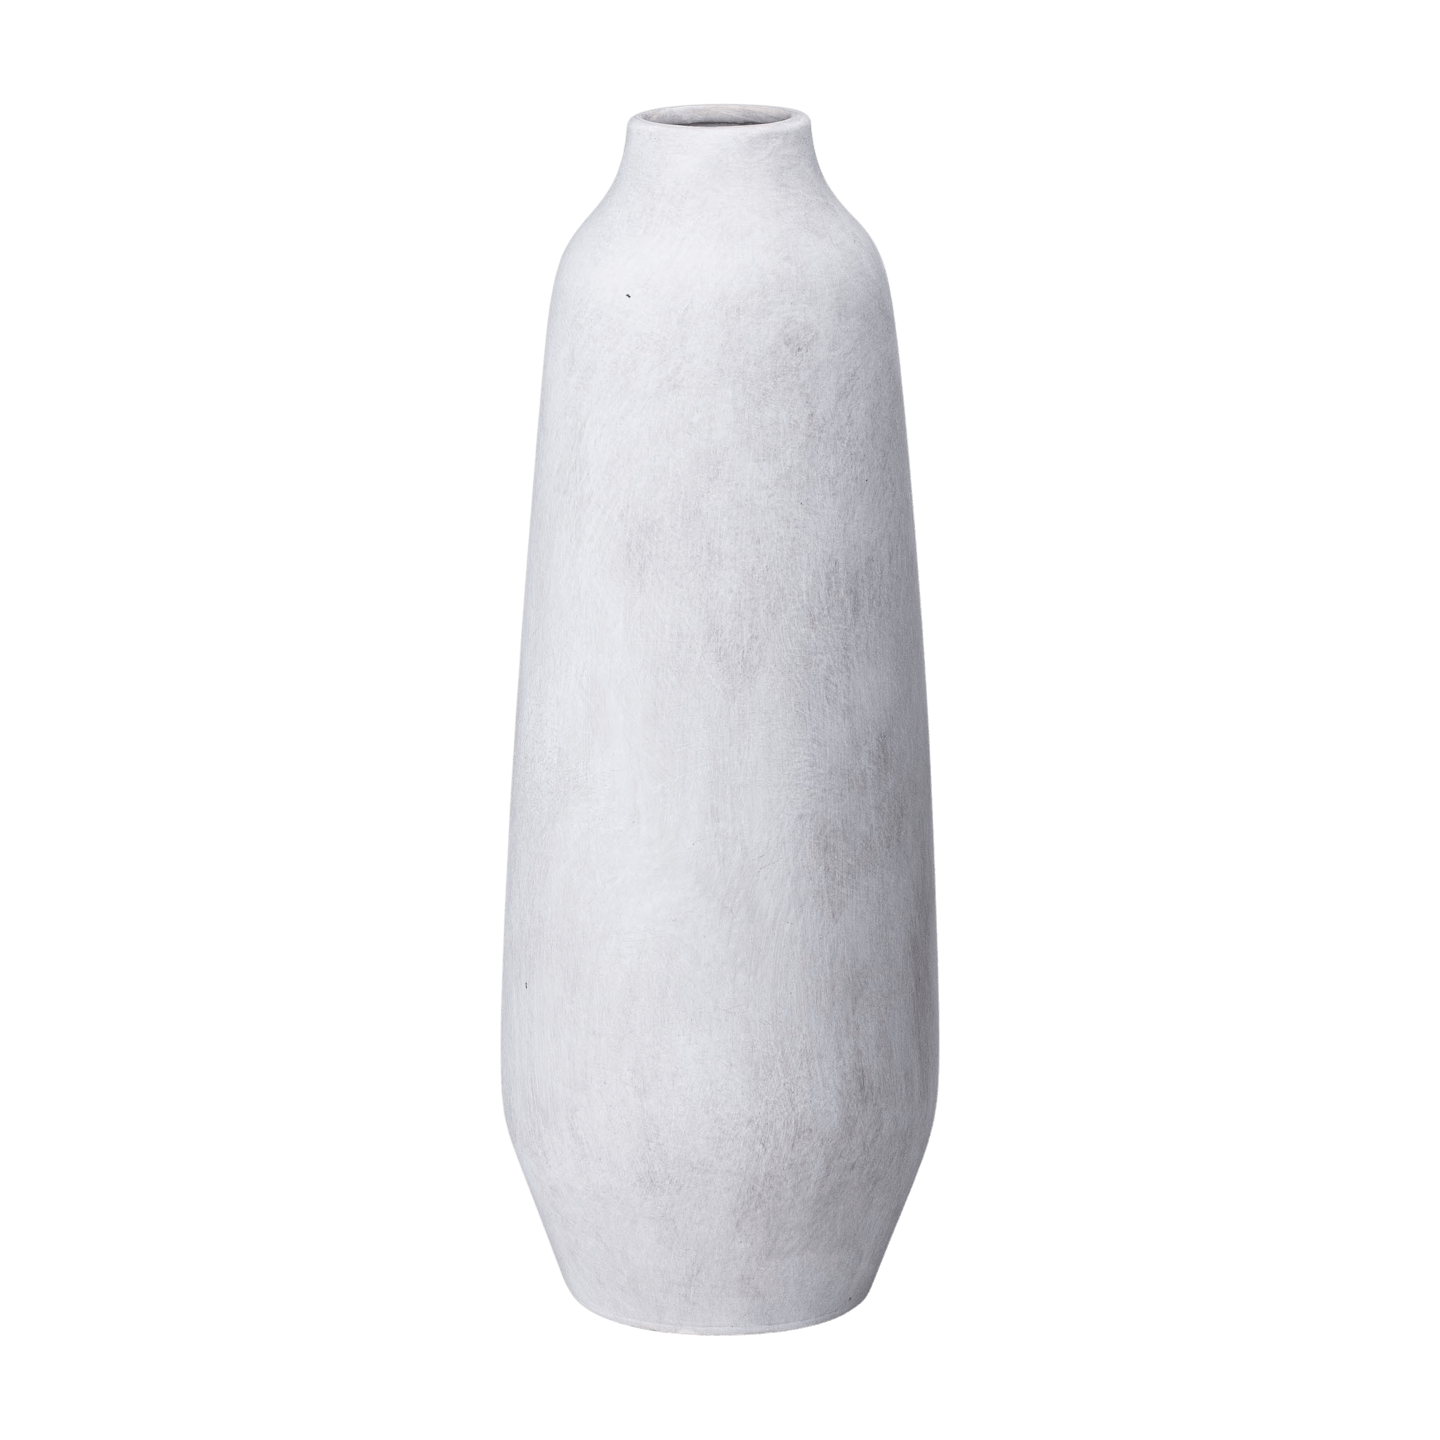 Tall, narrow, pale stone vase